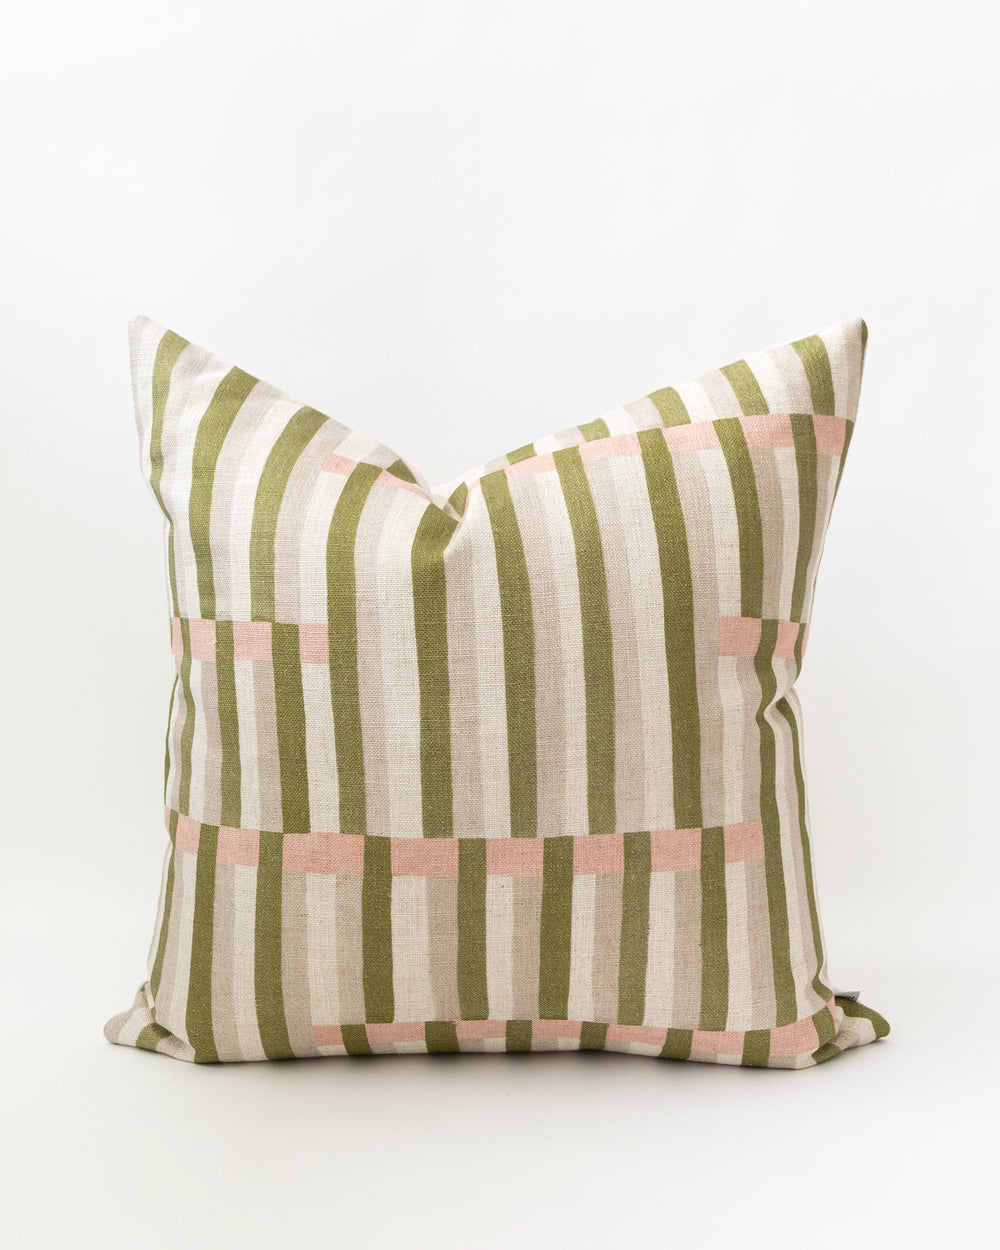 Square striped Imogen Heath fabric pillow.